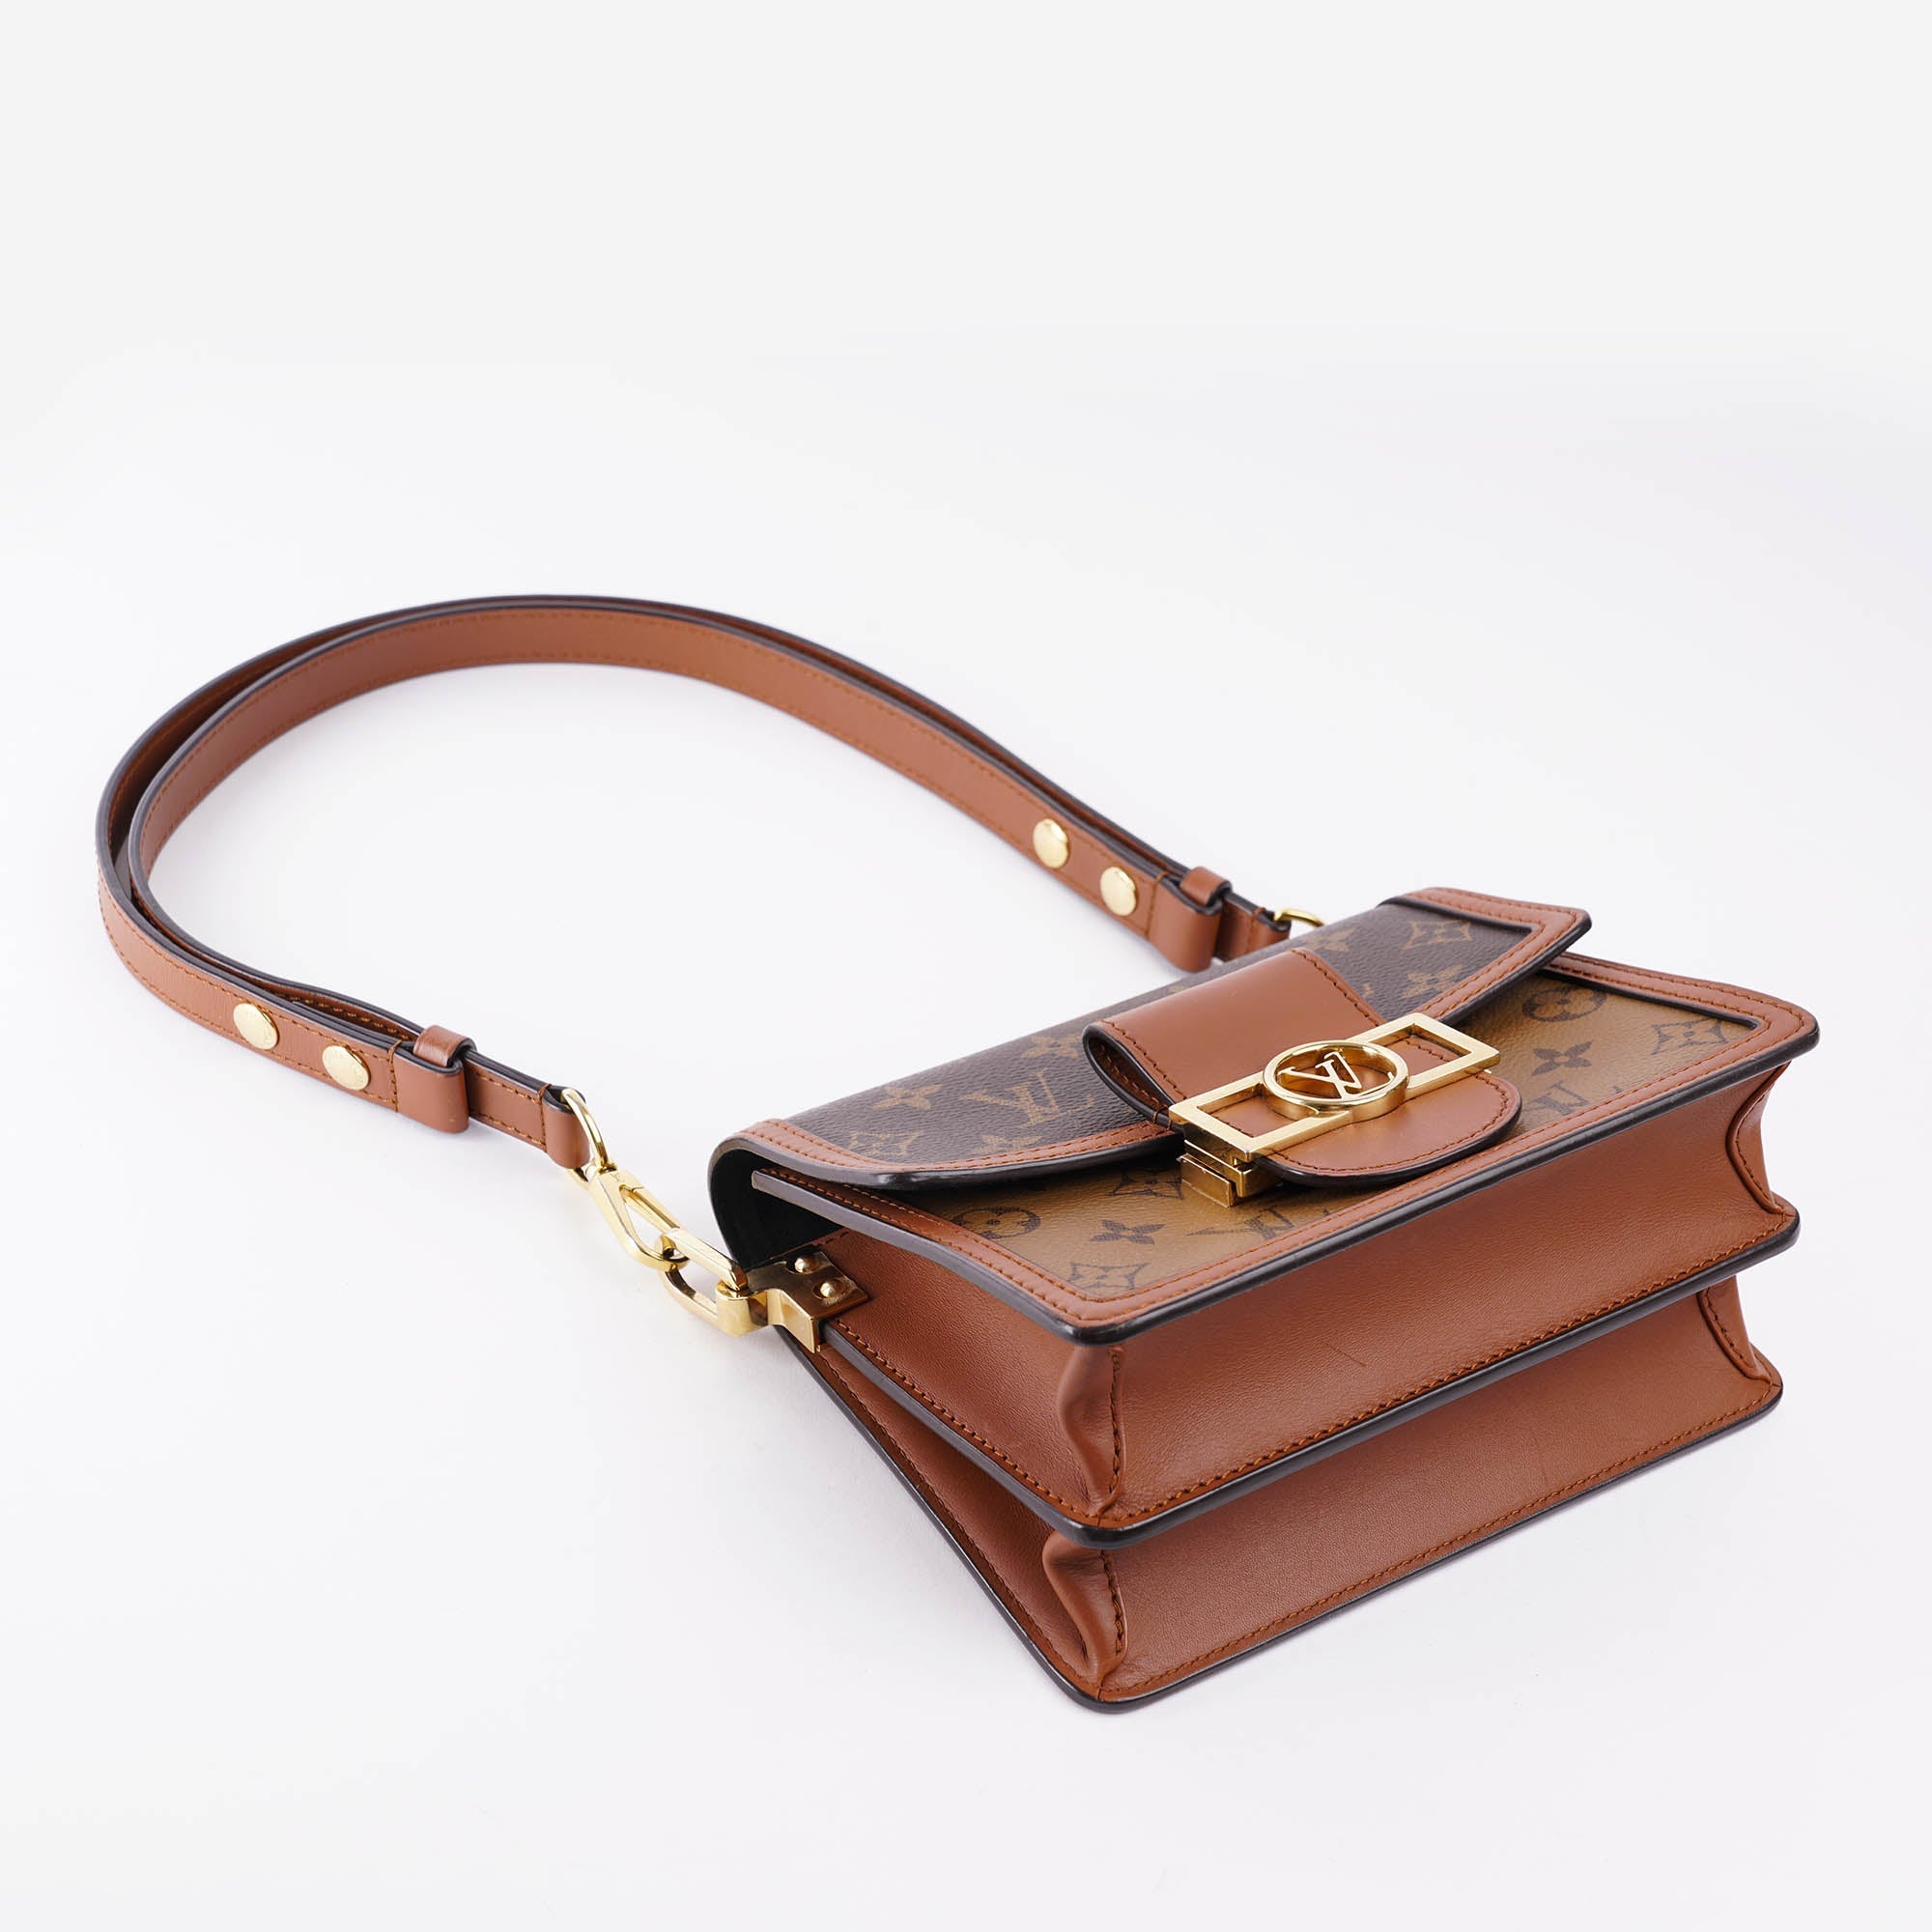 Dauphine Mini Shoulder Bag - LOUIS VUITTON - Affordable Luxury image